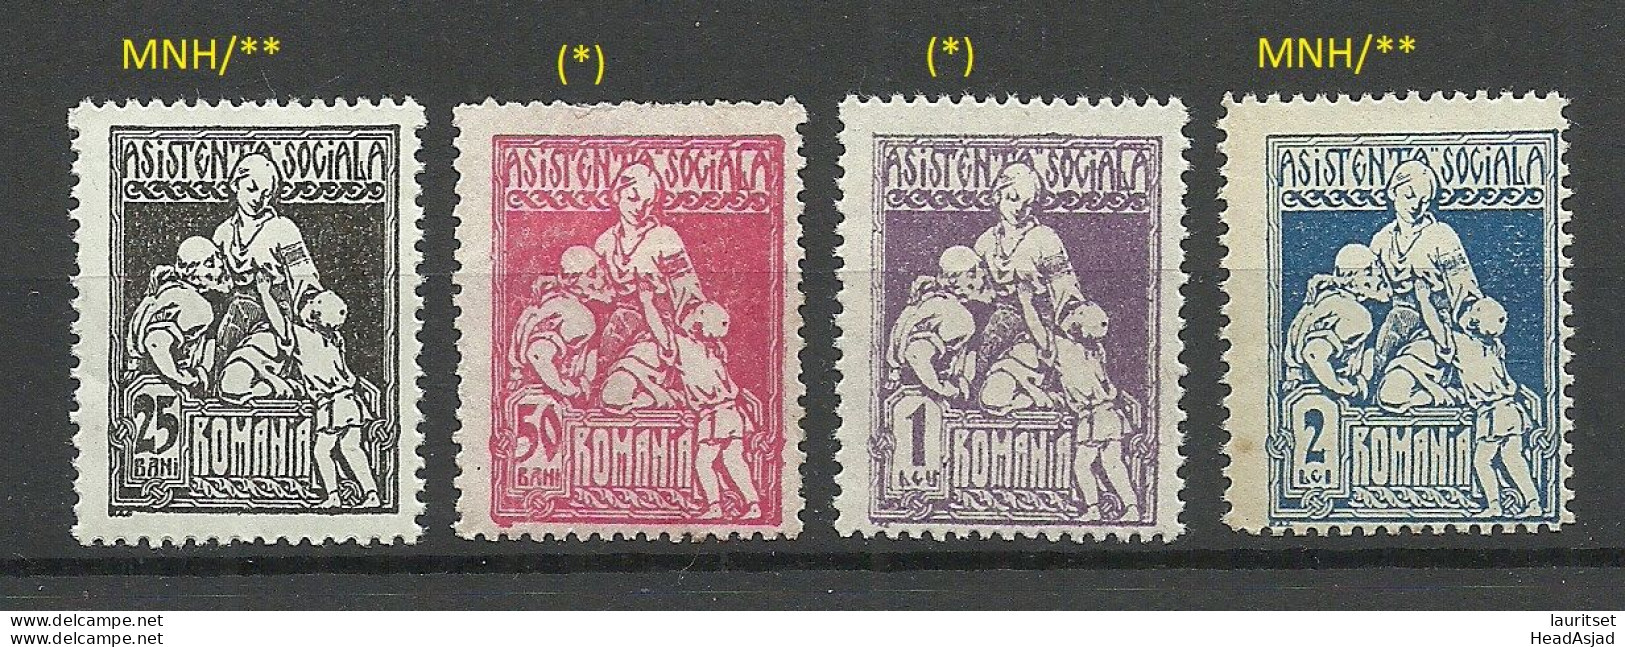 ROMANIA ROMANA 1921 Asistenta Sociala Charity Charite Wohlfahrt Krankenpflege Tax Steuermarken, 4 Stamps, Unused MNH/(*) - Unused Stamps